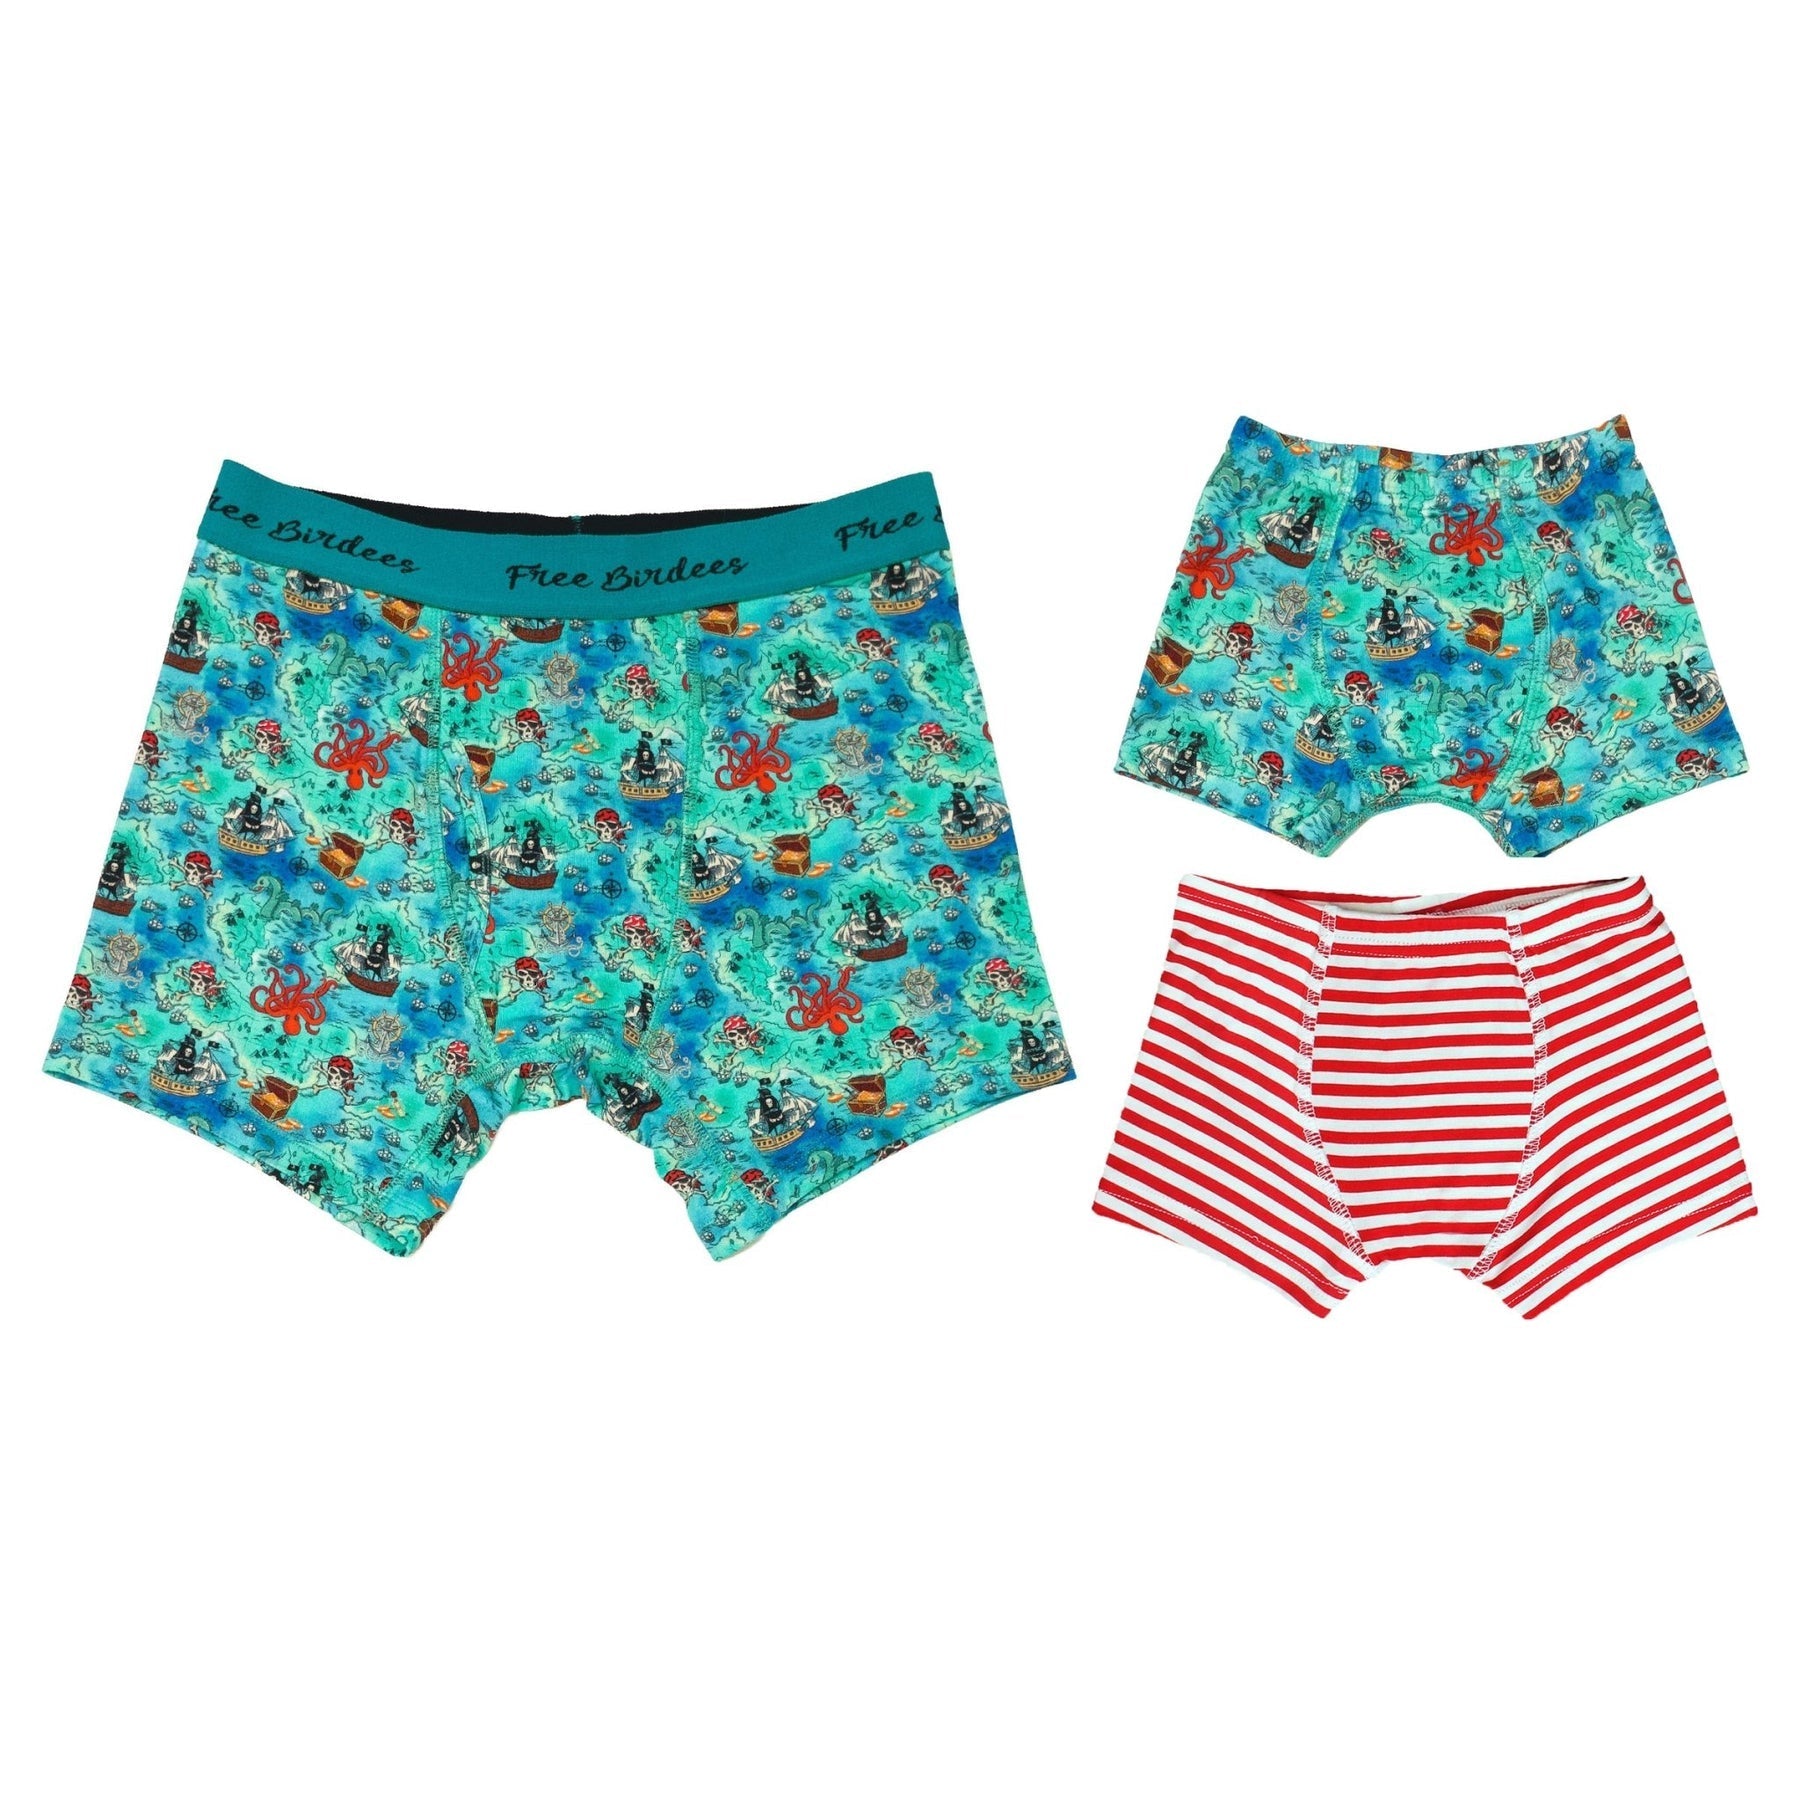  Boys Briefs Boys Soft Dino Cotton Toddler Underwear Boys  Boxer Briefs 2T Multicolor